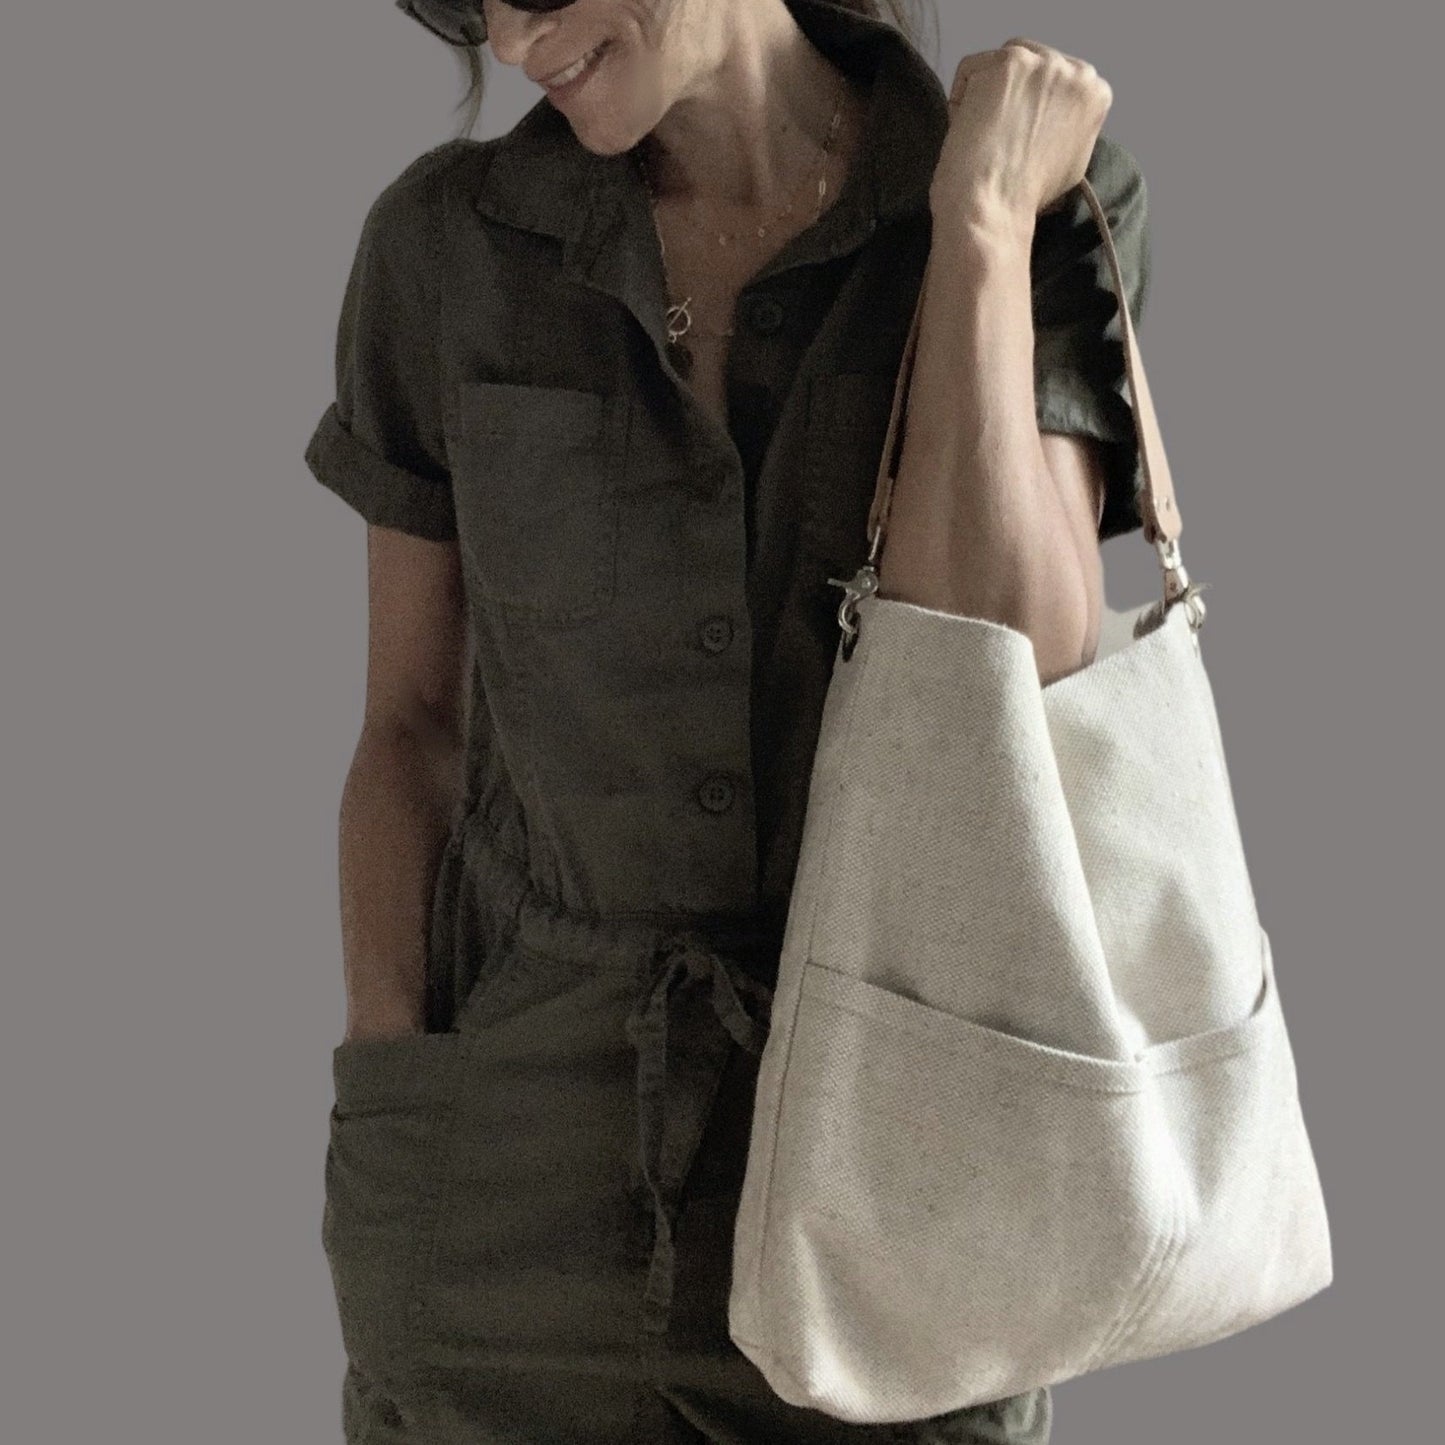 lifestyle photo of model holding large woven shoulder bag